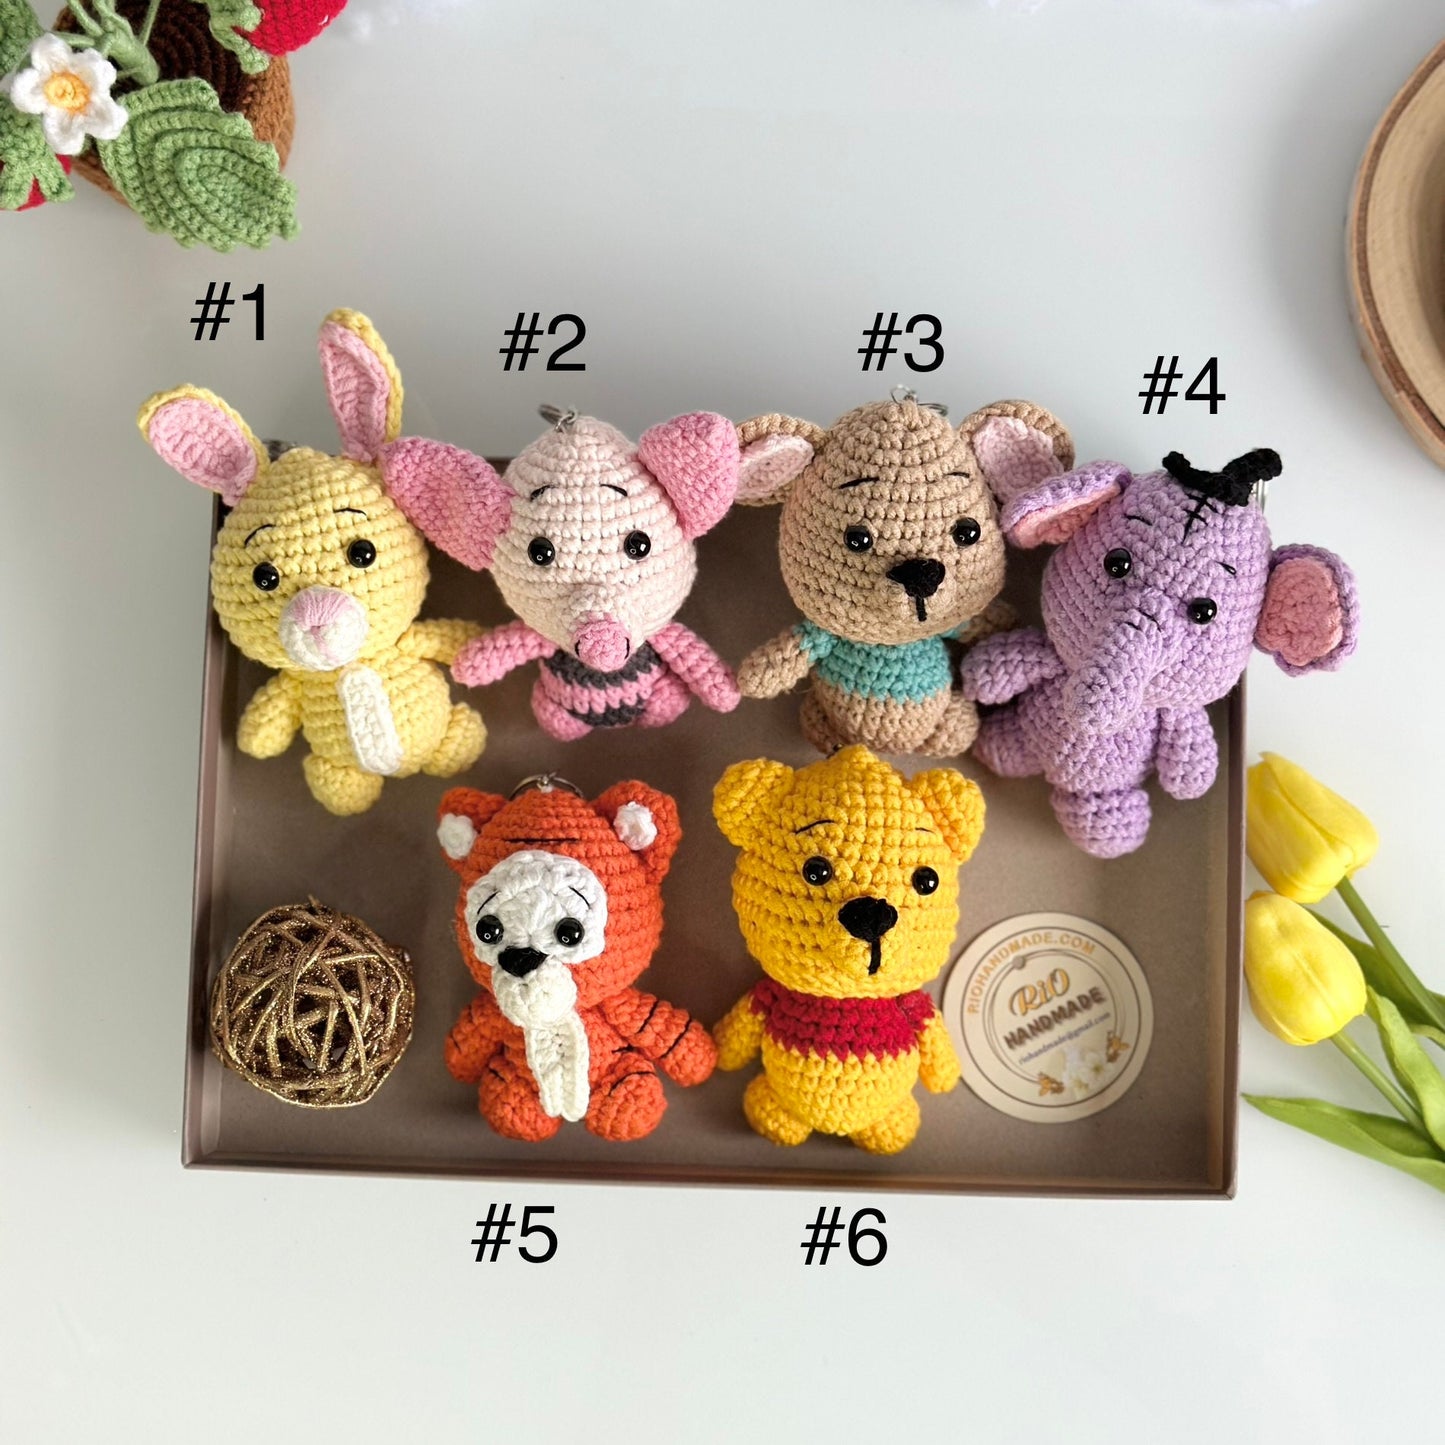 Handmade yarn cotton animal crochet, amigurumi Winnie the Pooh inspired stuffed, cute, soft toy for baby, toddler, kid, adult hobby,